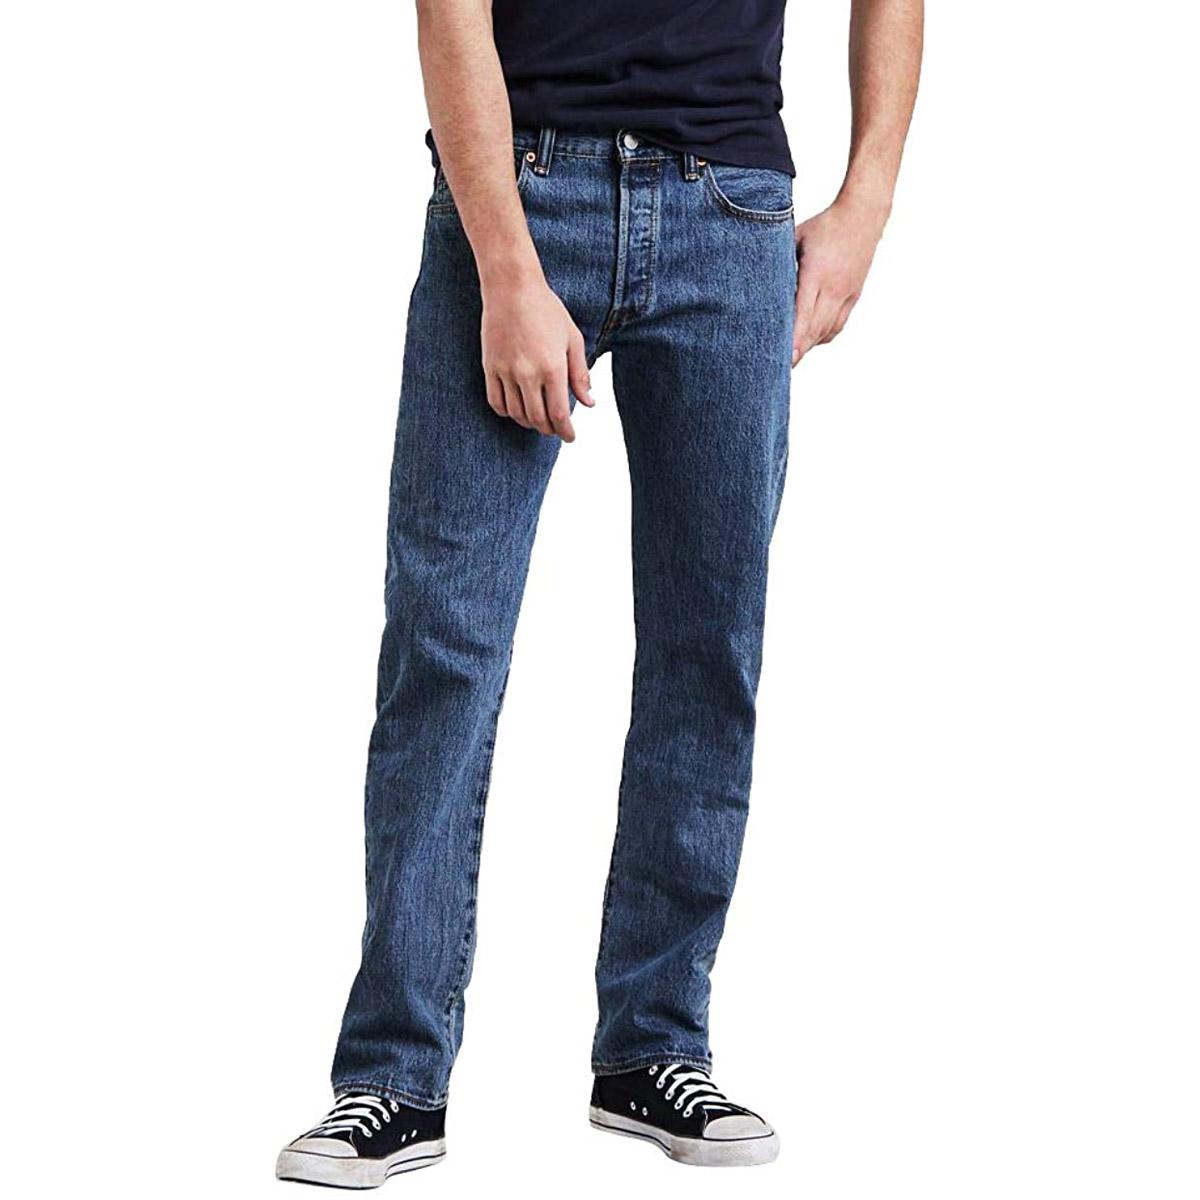 Levis Mens 501 Original Fit Jeans for $25.55 Shipped